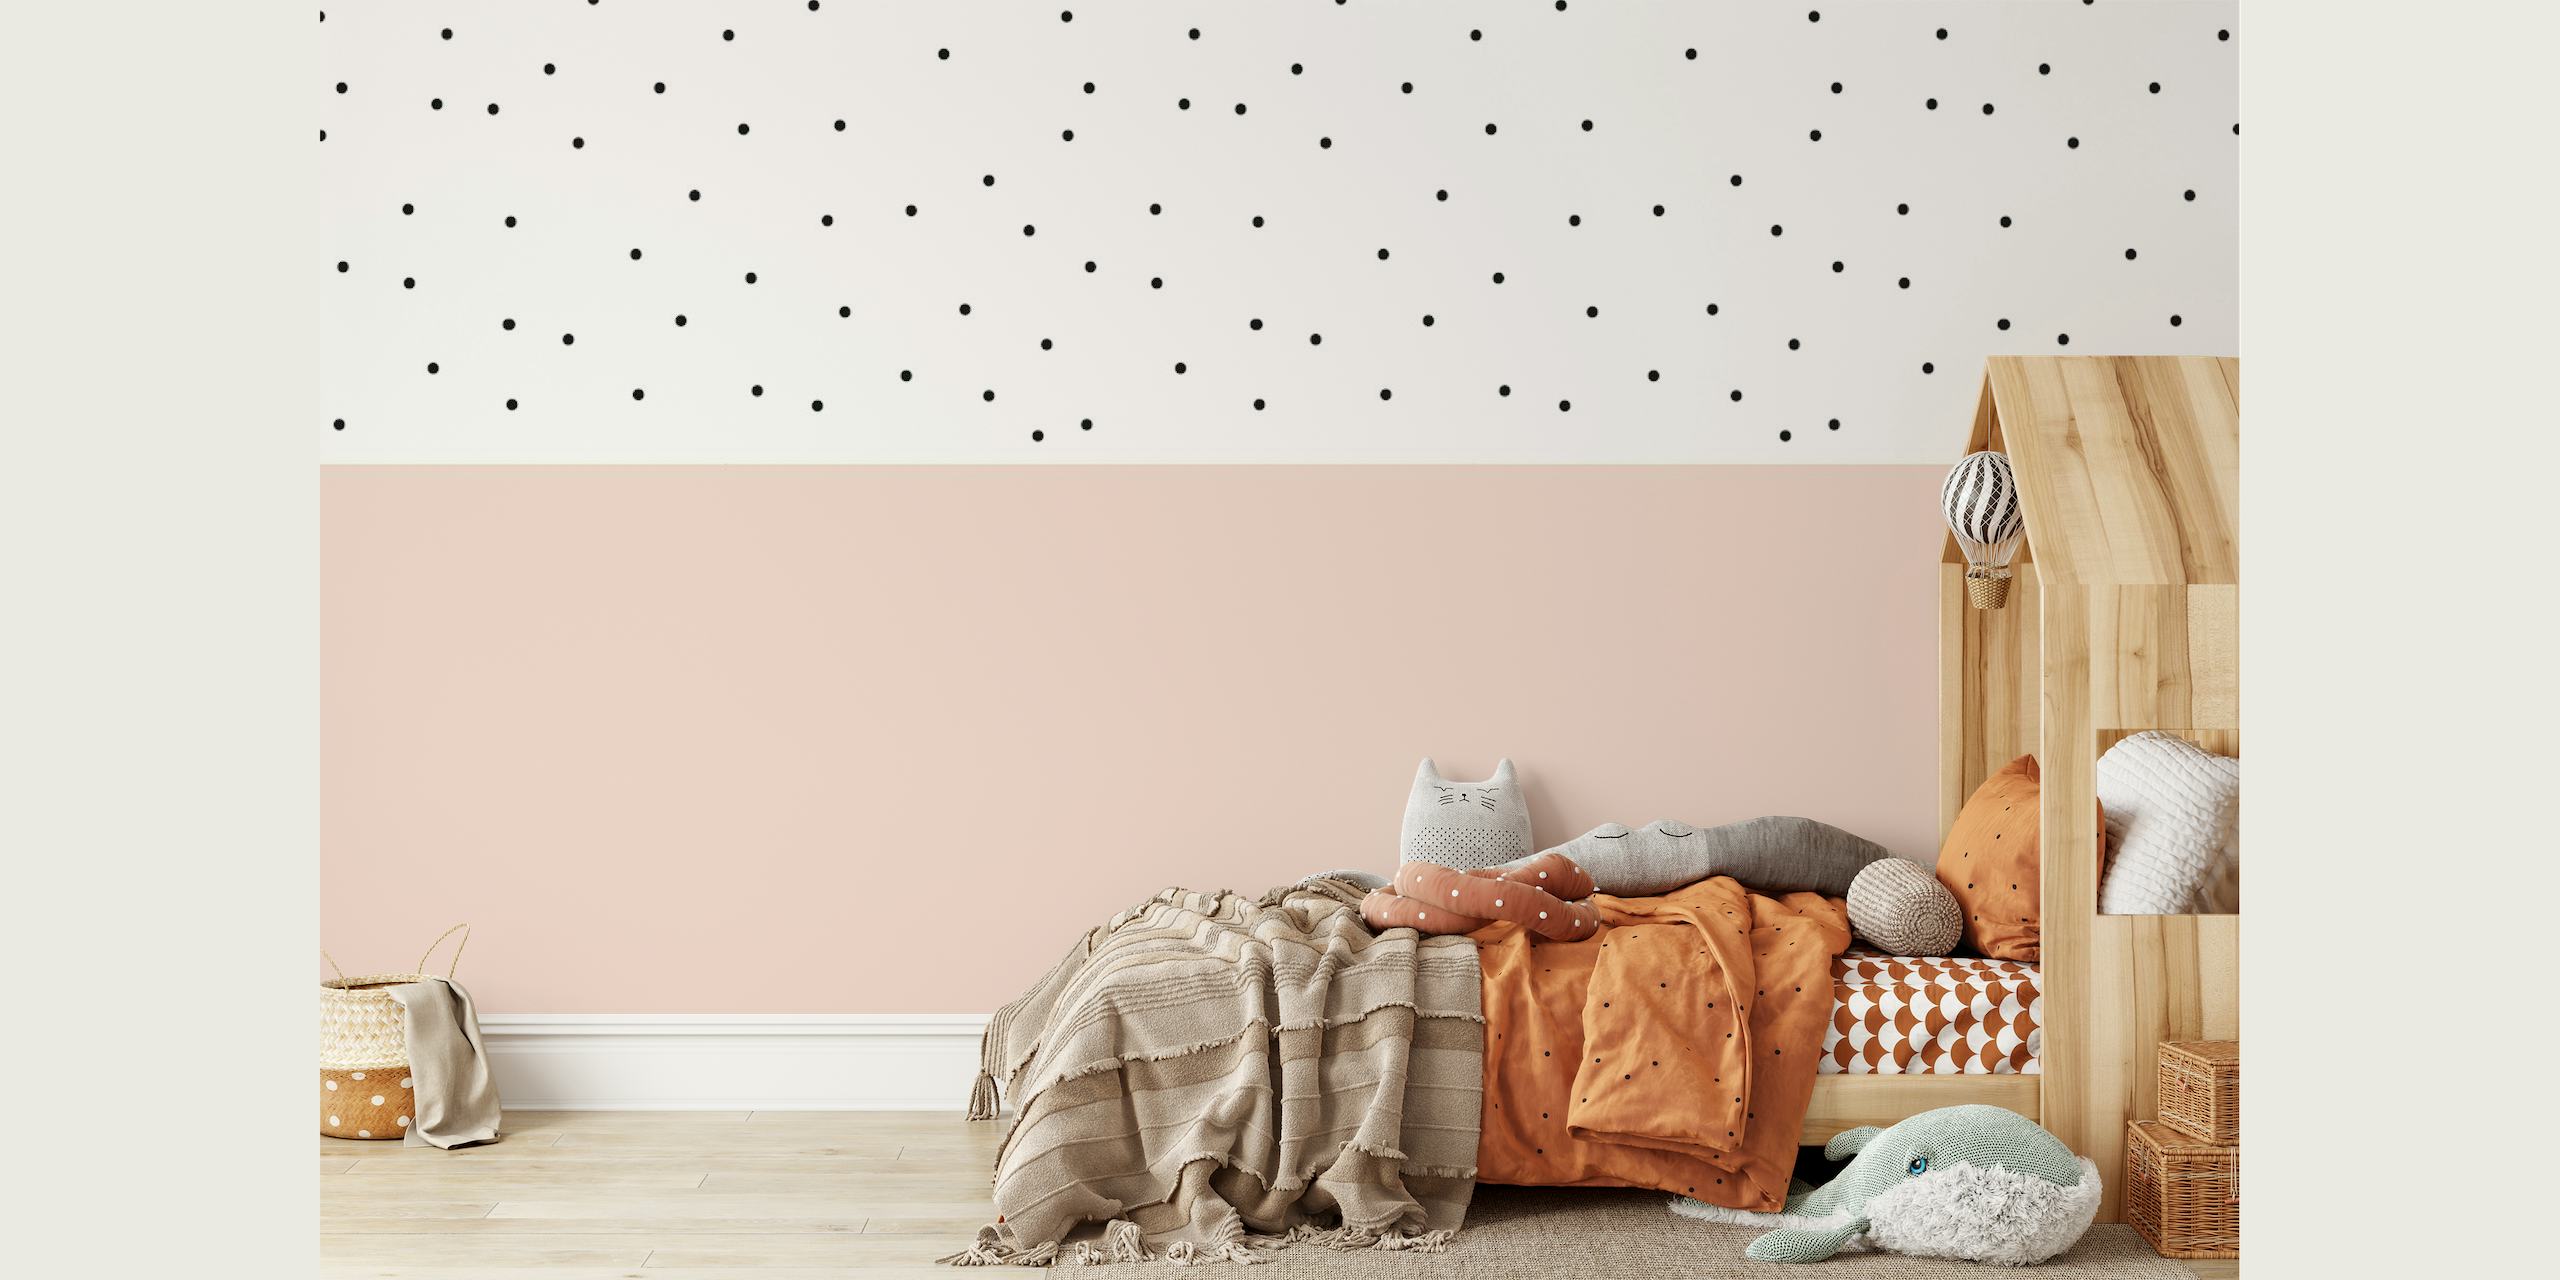 Soft pink wall mural with black polka dots